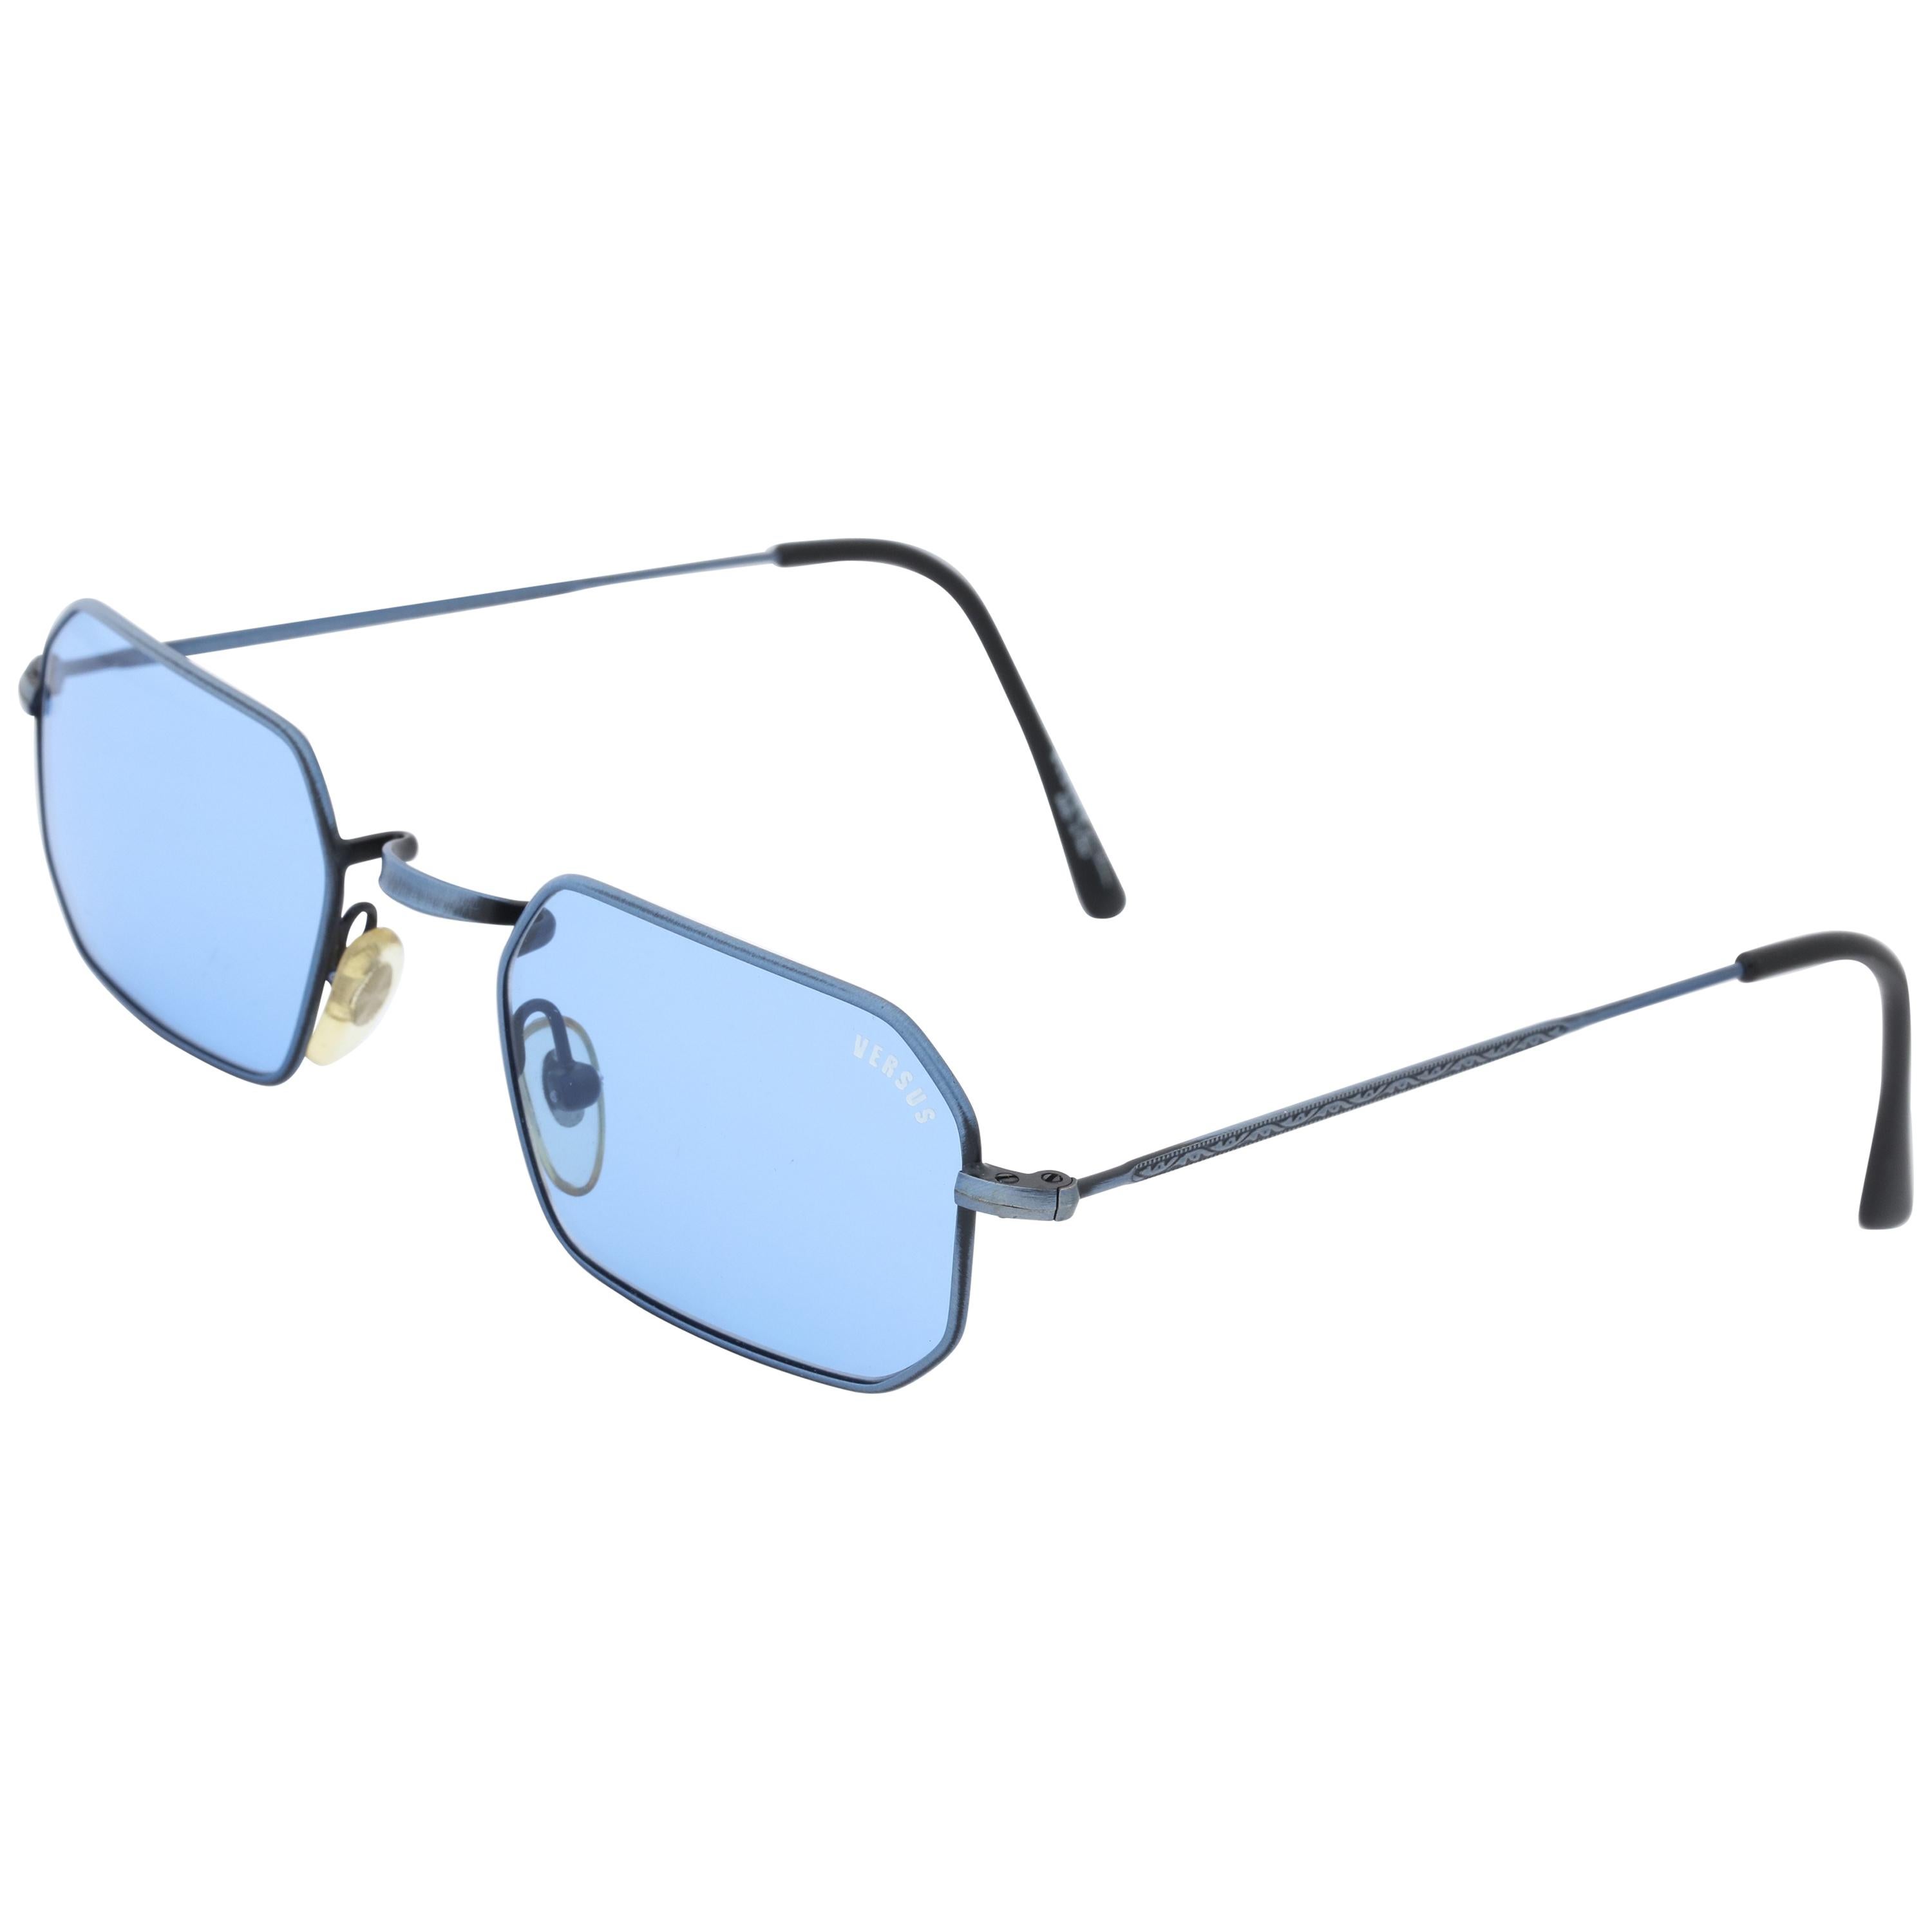 Versus by Gianni Versace Vintage Sunglasses Mod E60